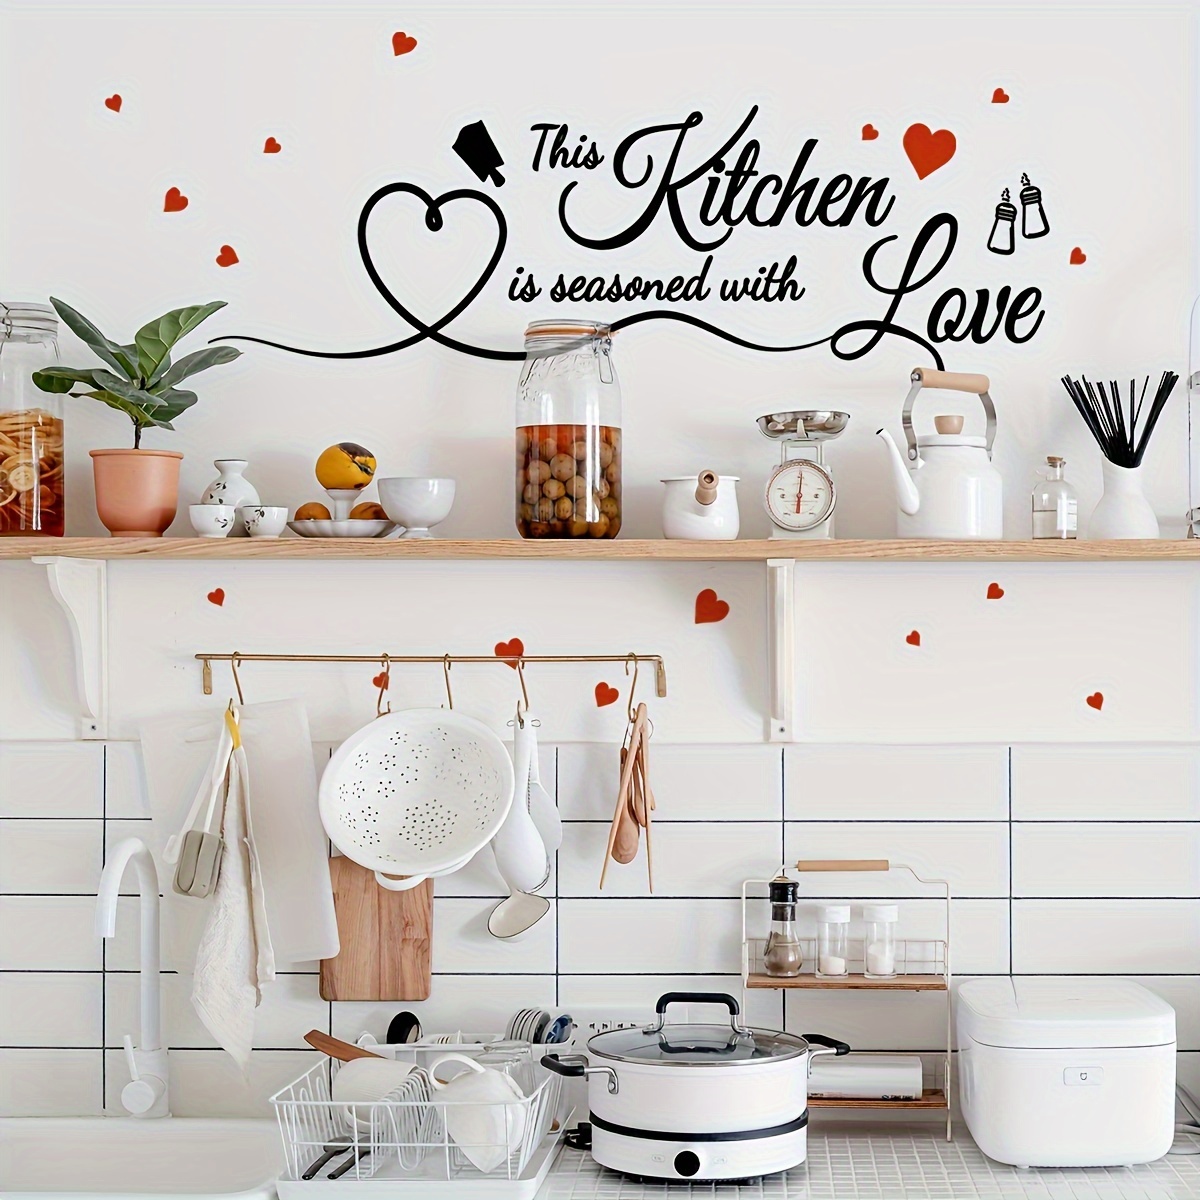 

heartfelt" Romantic Kitchen Wall Sticker - Easy Peel & Stick, Removable Pvc Decor